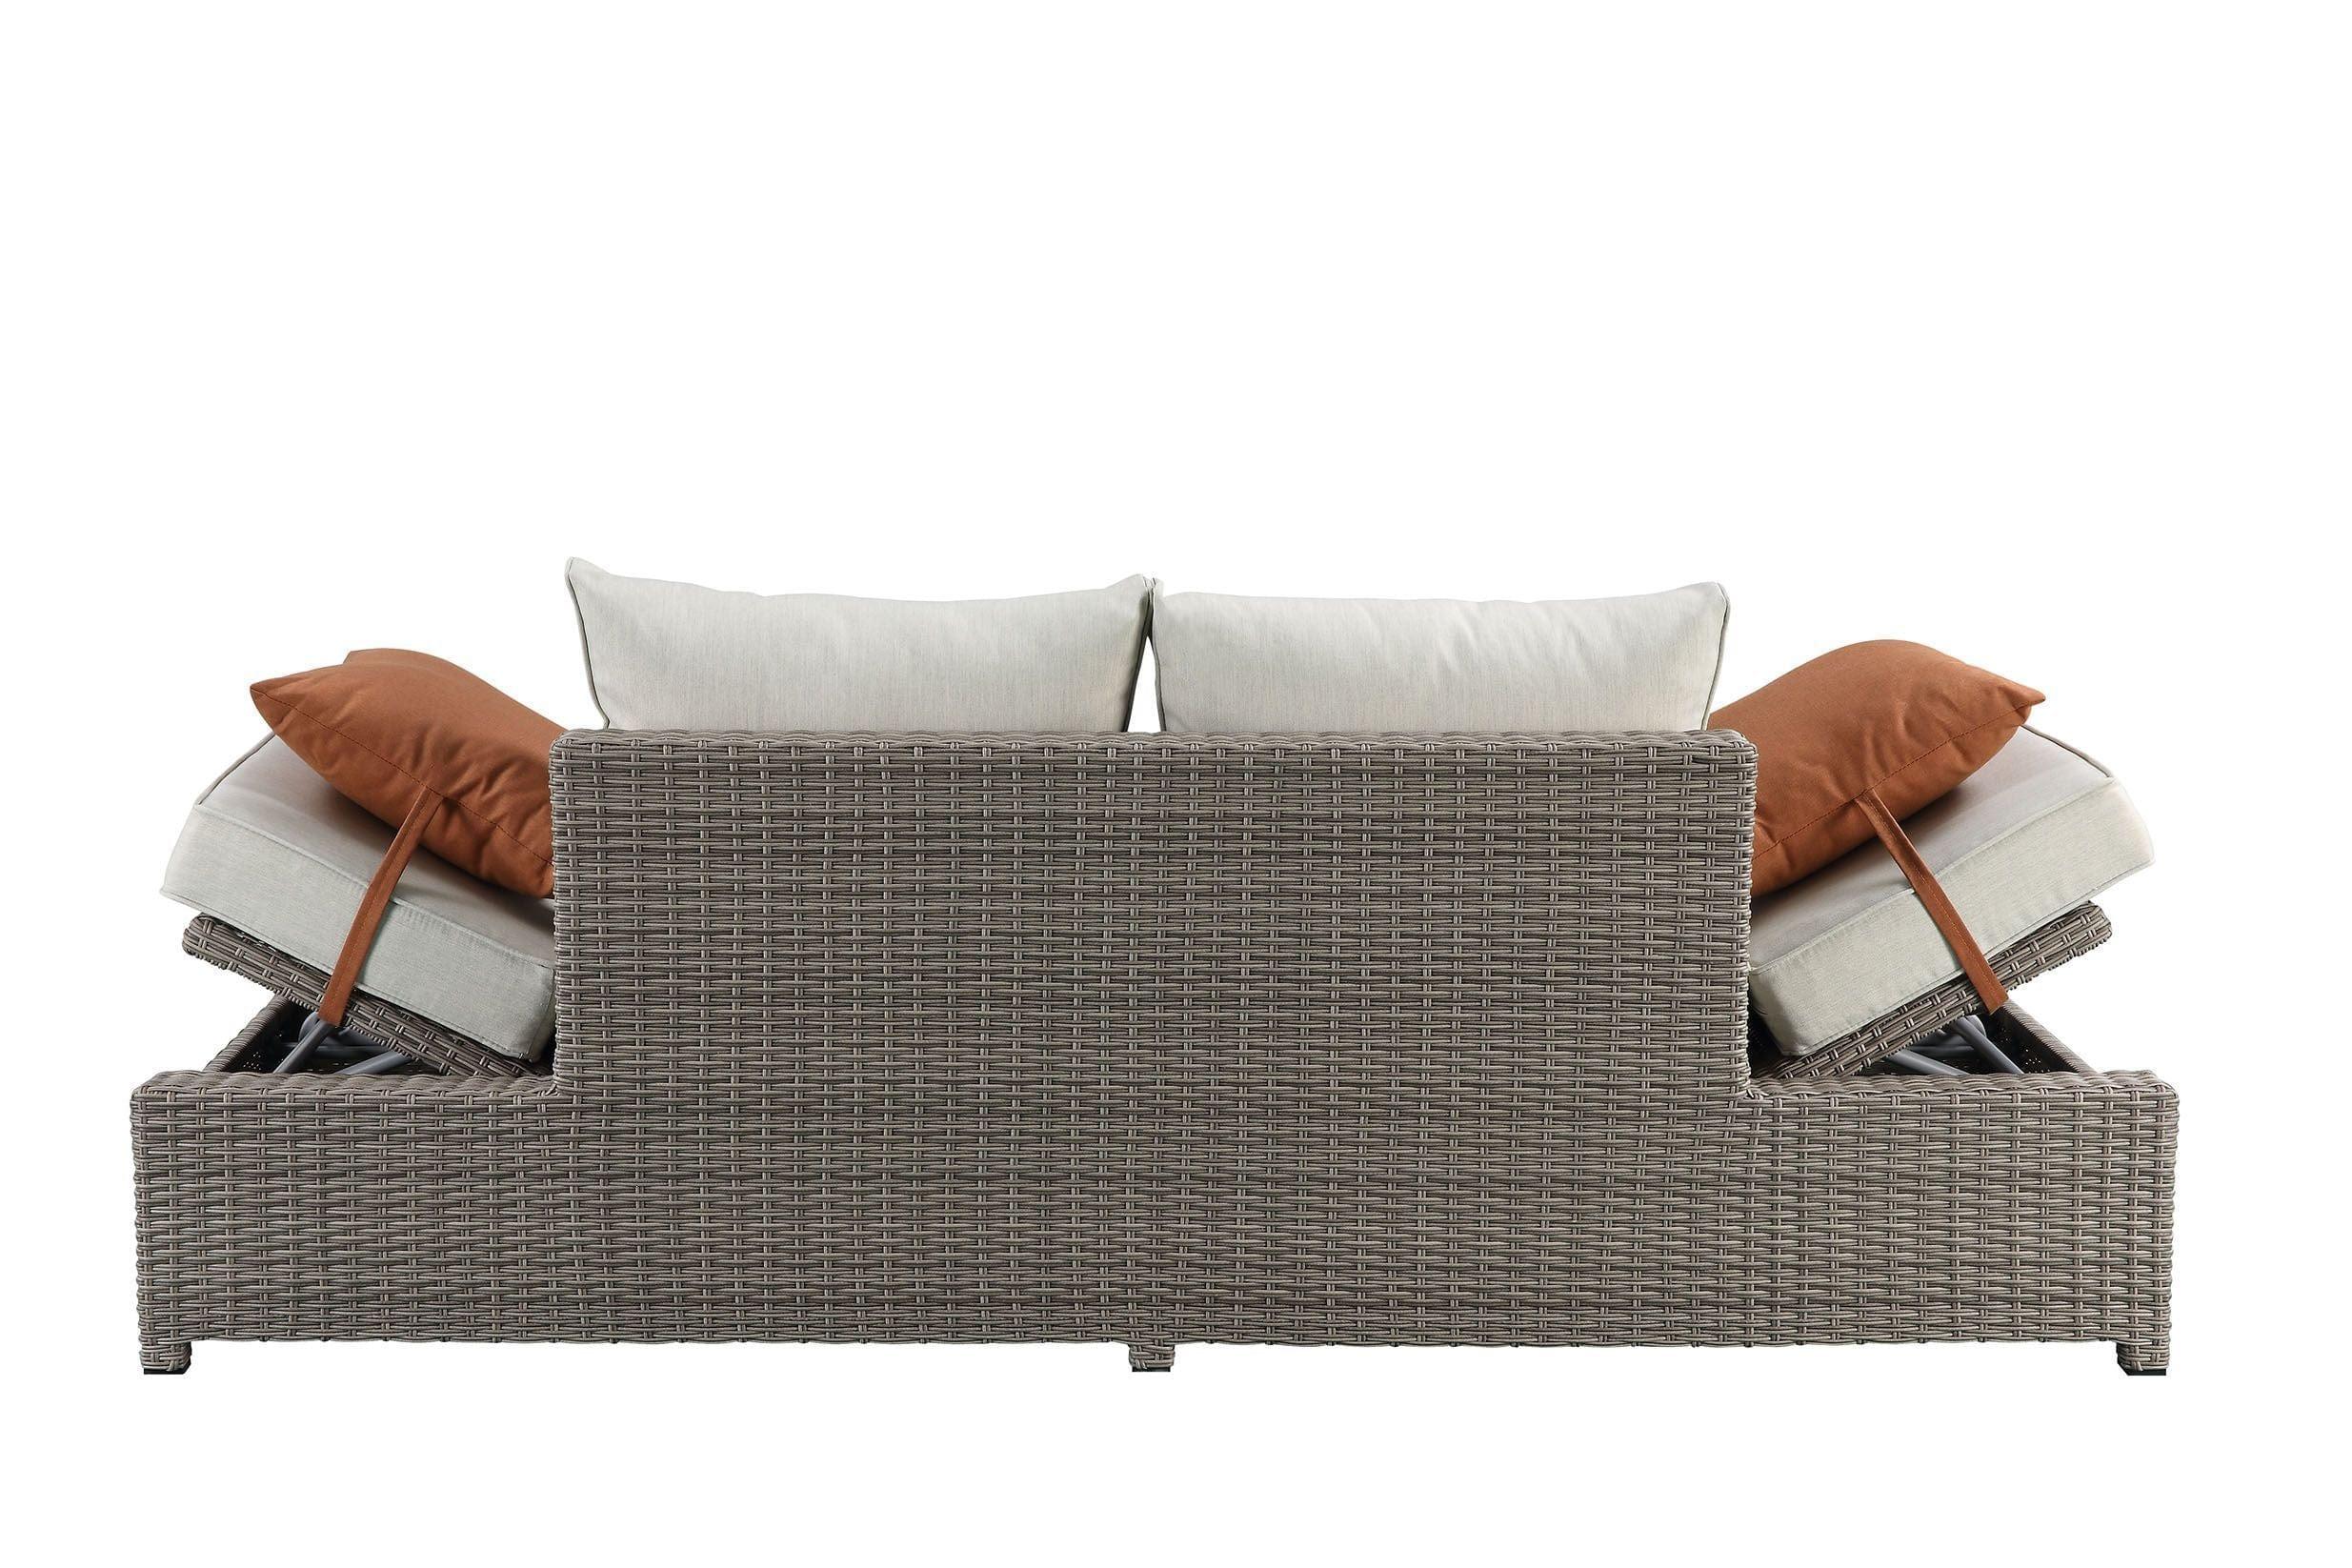 Shop ACME Salena Patio Sofa & Ottoman w/2 Pillows in Beige Fabric & Gray Wicker 45015 Mademoiselle Home Decor